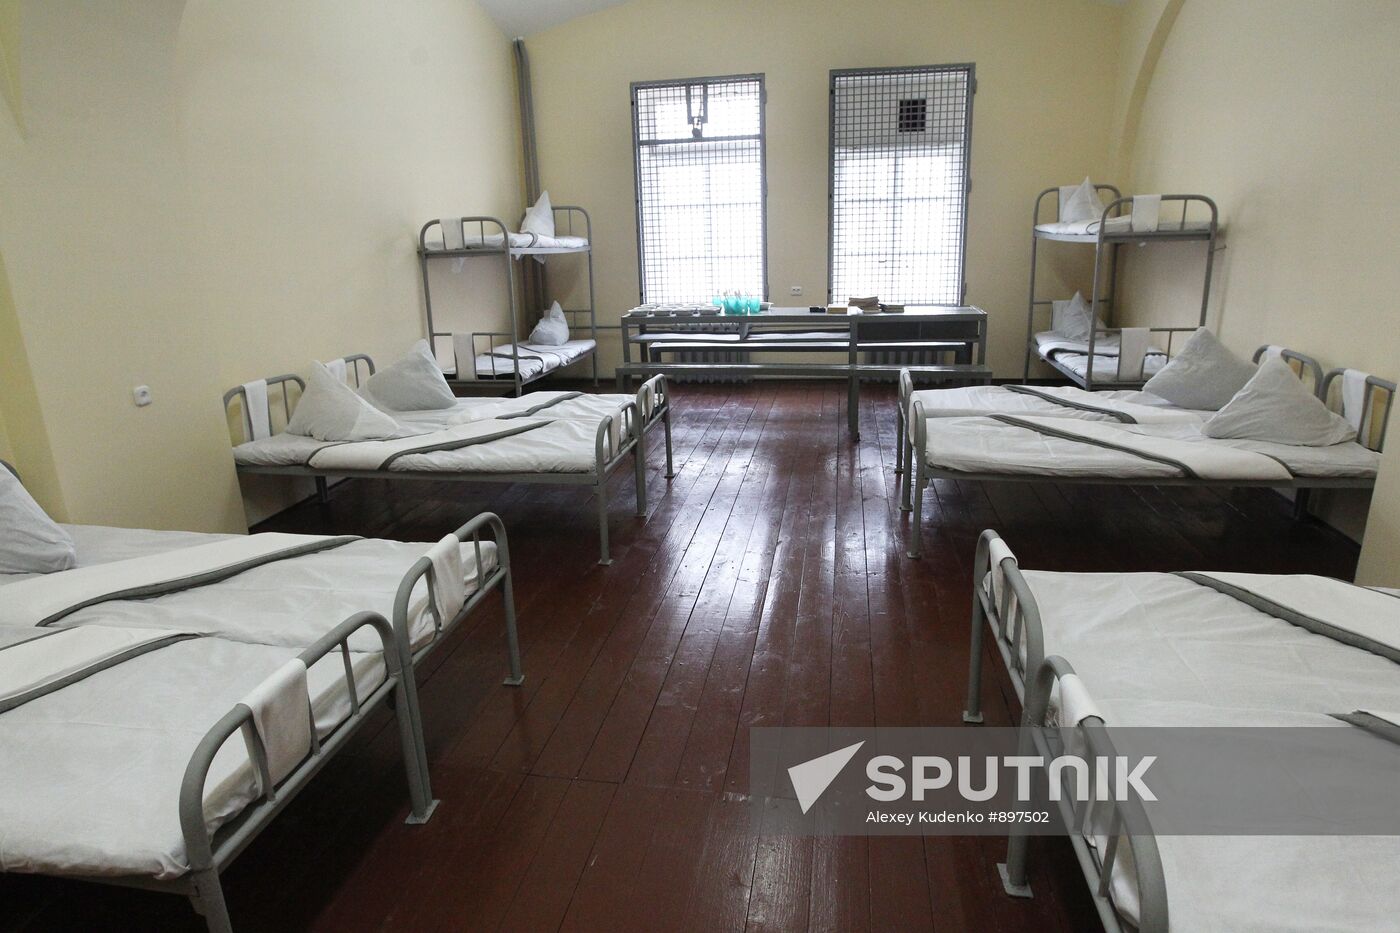 Butyrka remand prison, pretrial detention center No.2